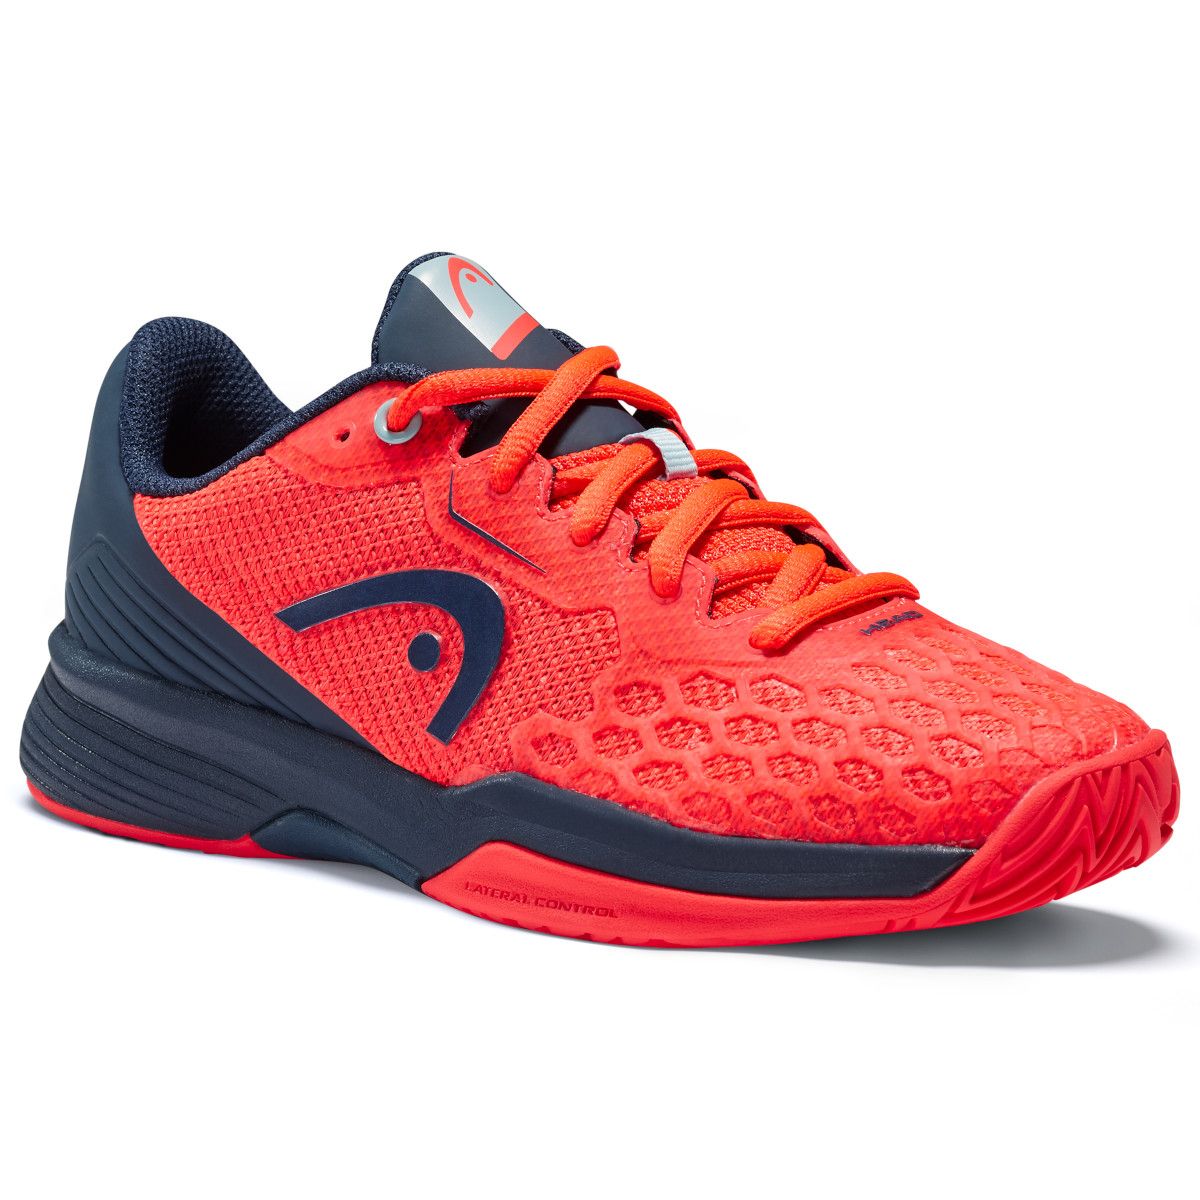 Men's Head Revolt Pro 3.0 Performance Tennis Shoes Footwear Red/Dark Blue 10 